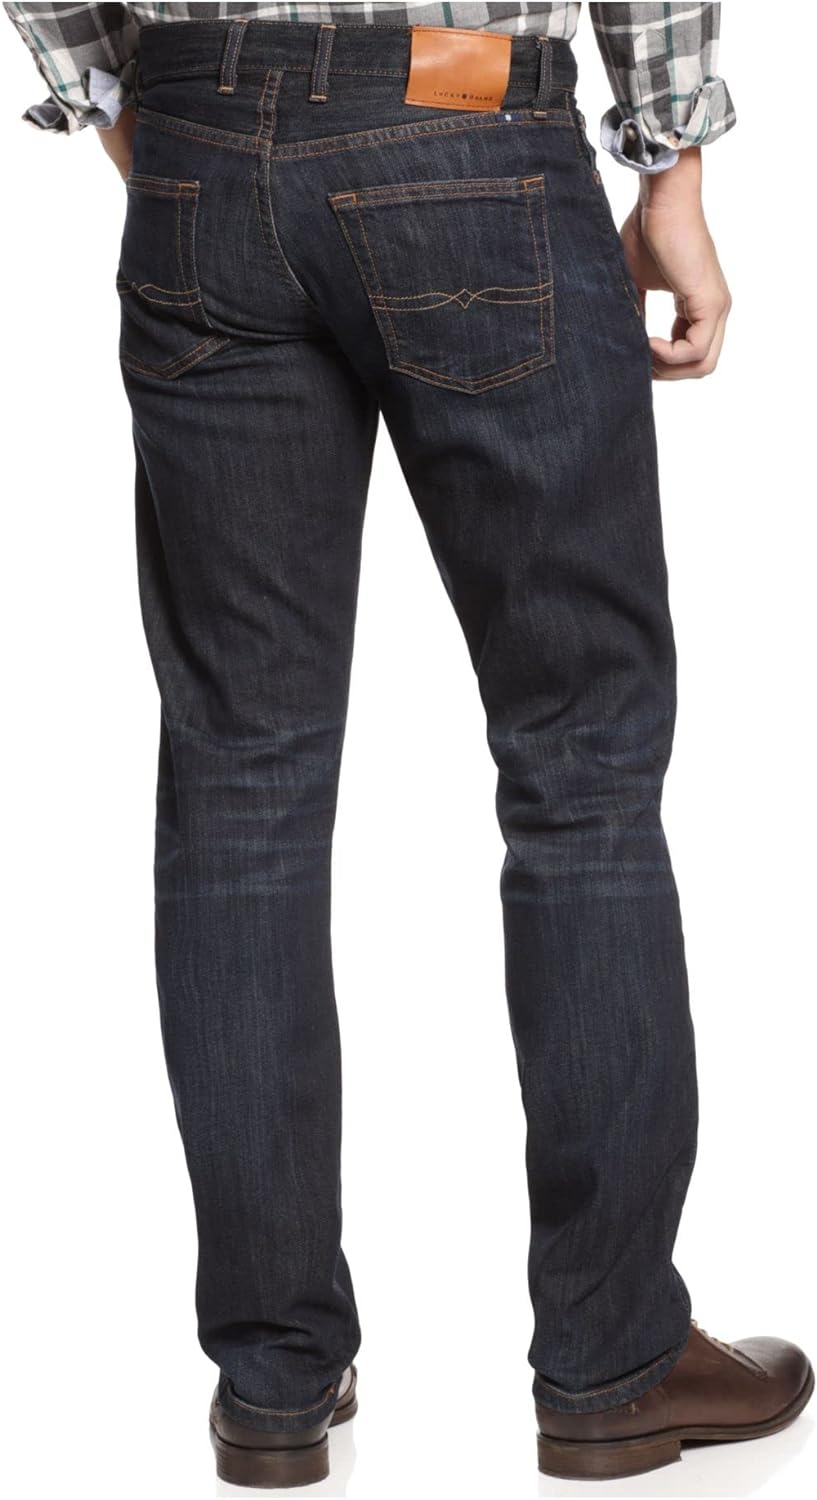 221 Original Straight Barite Wash Jeans - image 2 of 4